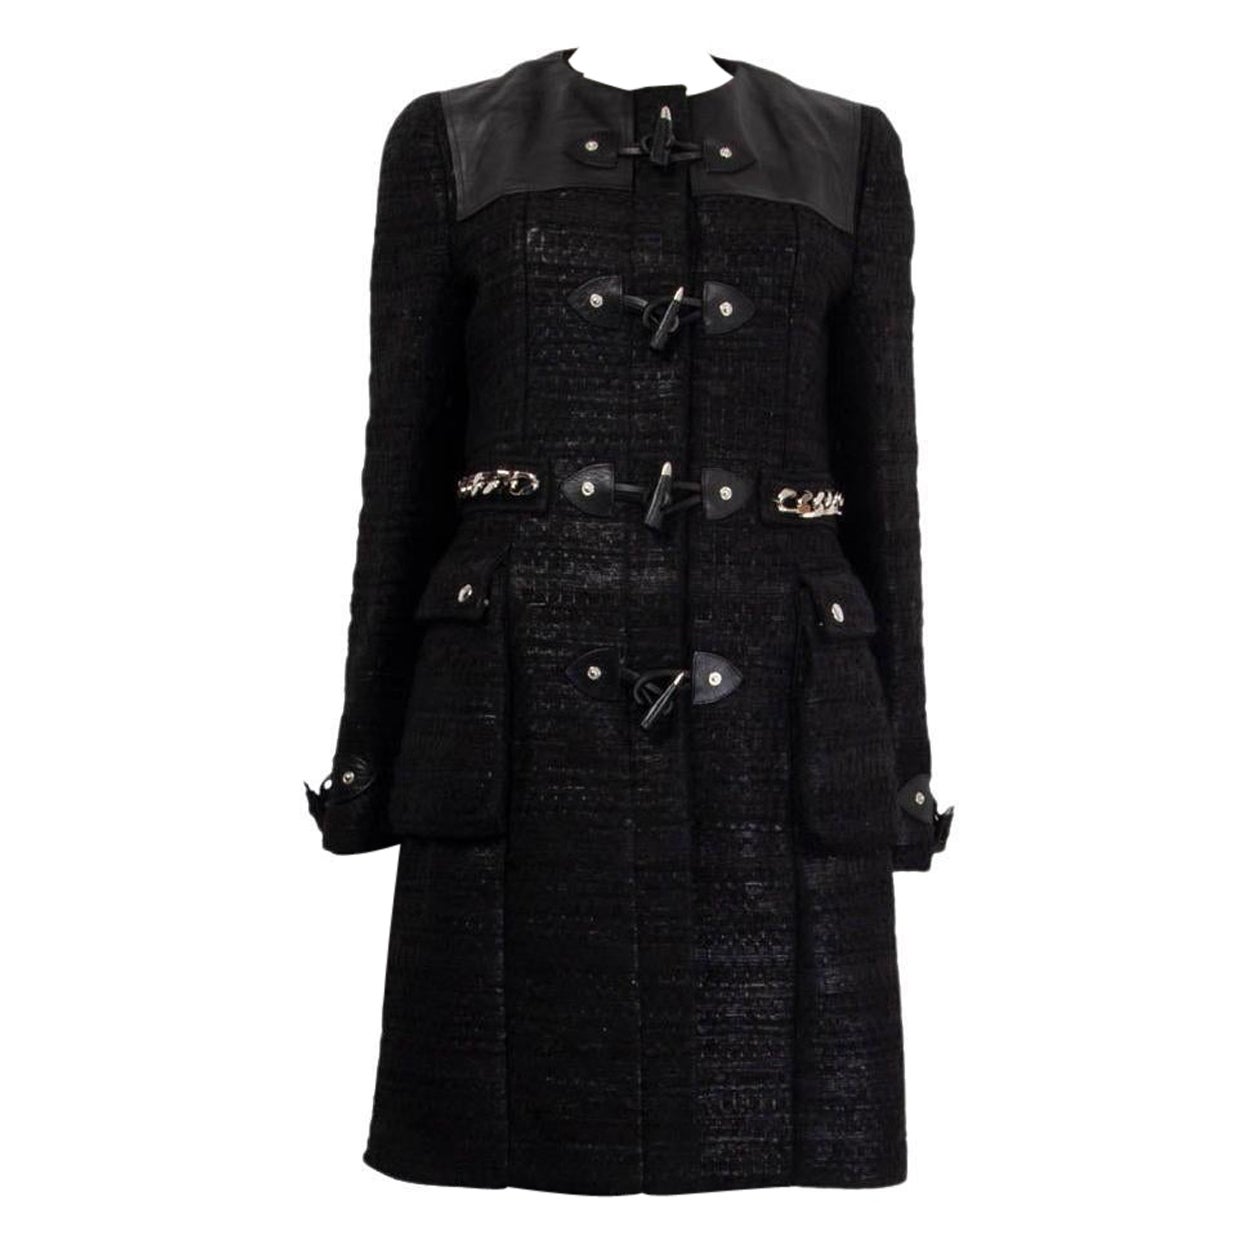 GIVENCHY schwarzer Wollmantel TWEED CHAIN EMBELLISHED DUFFLE Coat Jacke 38 S im Angebot